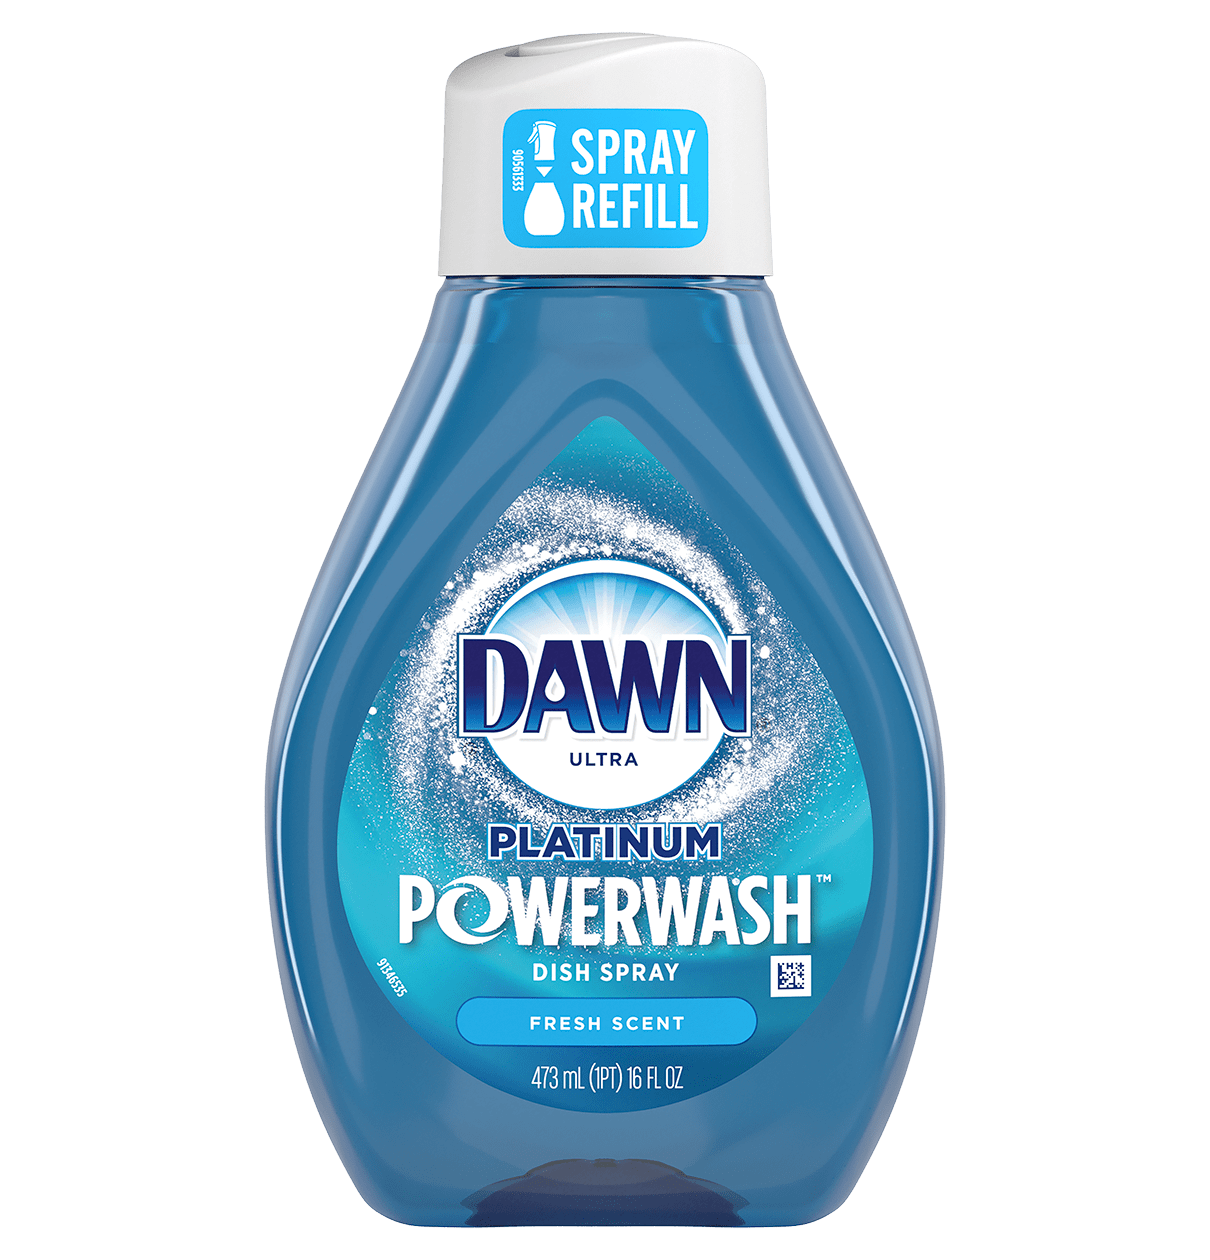 Dawn Powerwash HACK: .49 refill! 